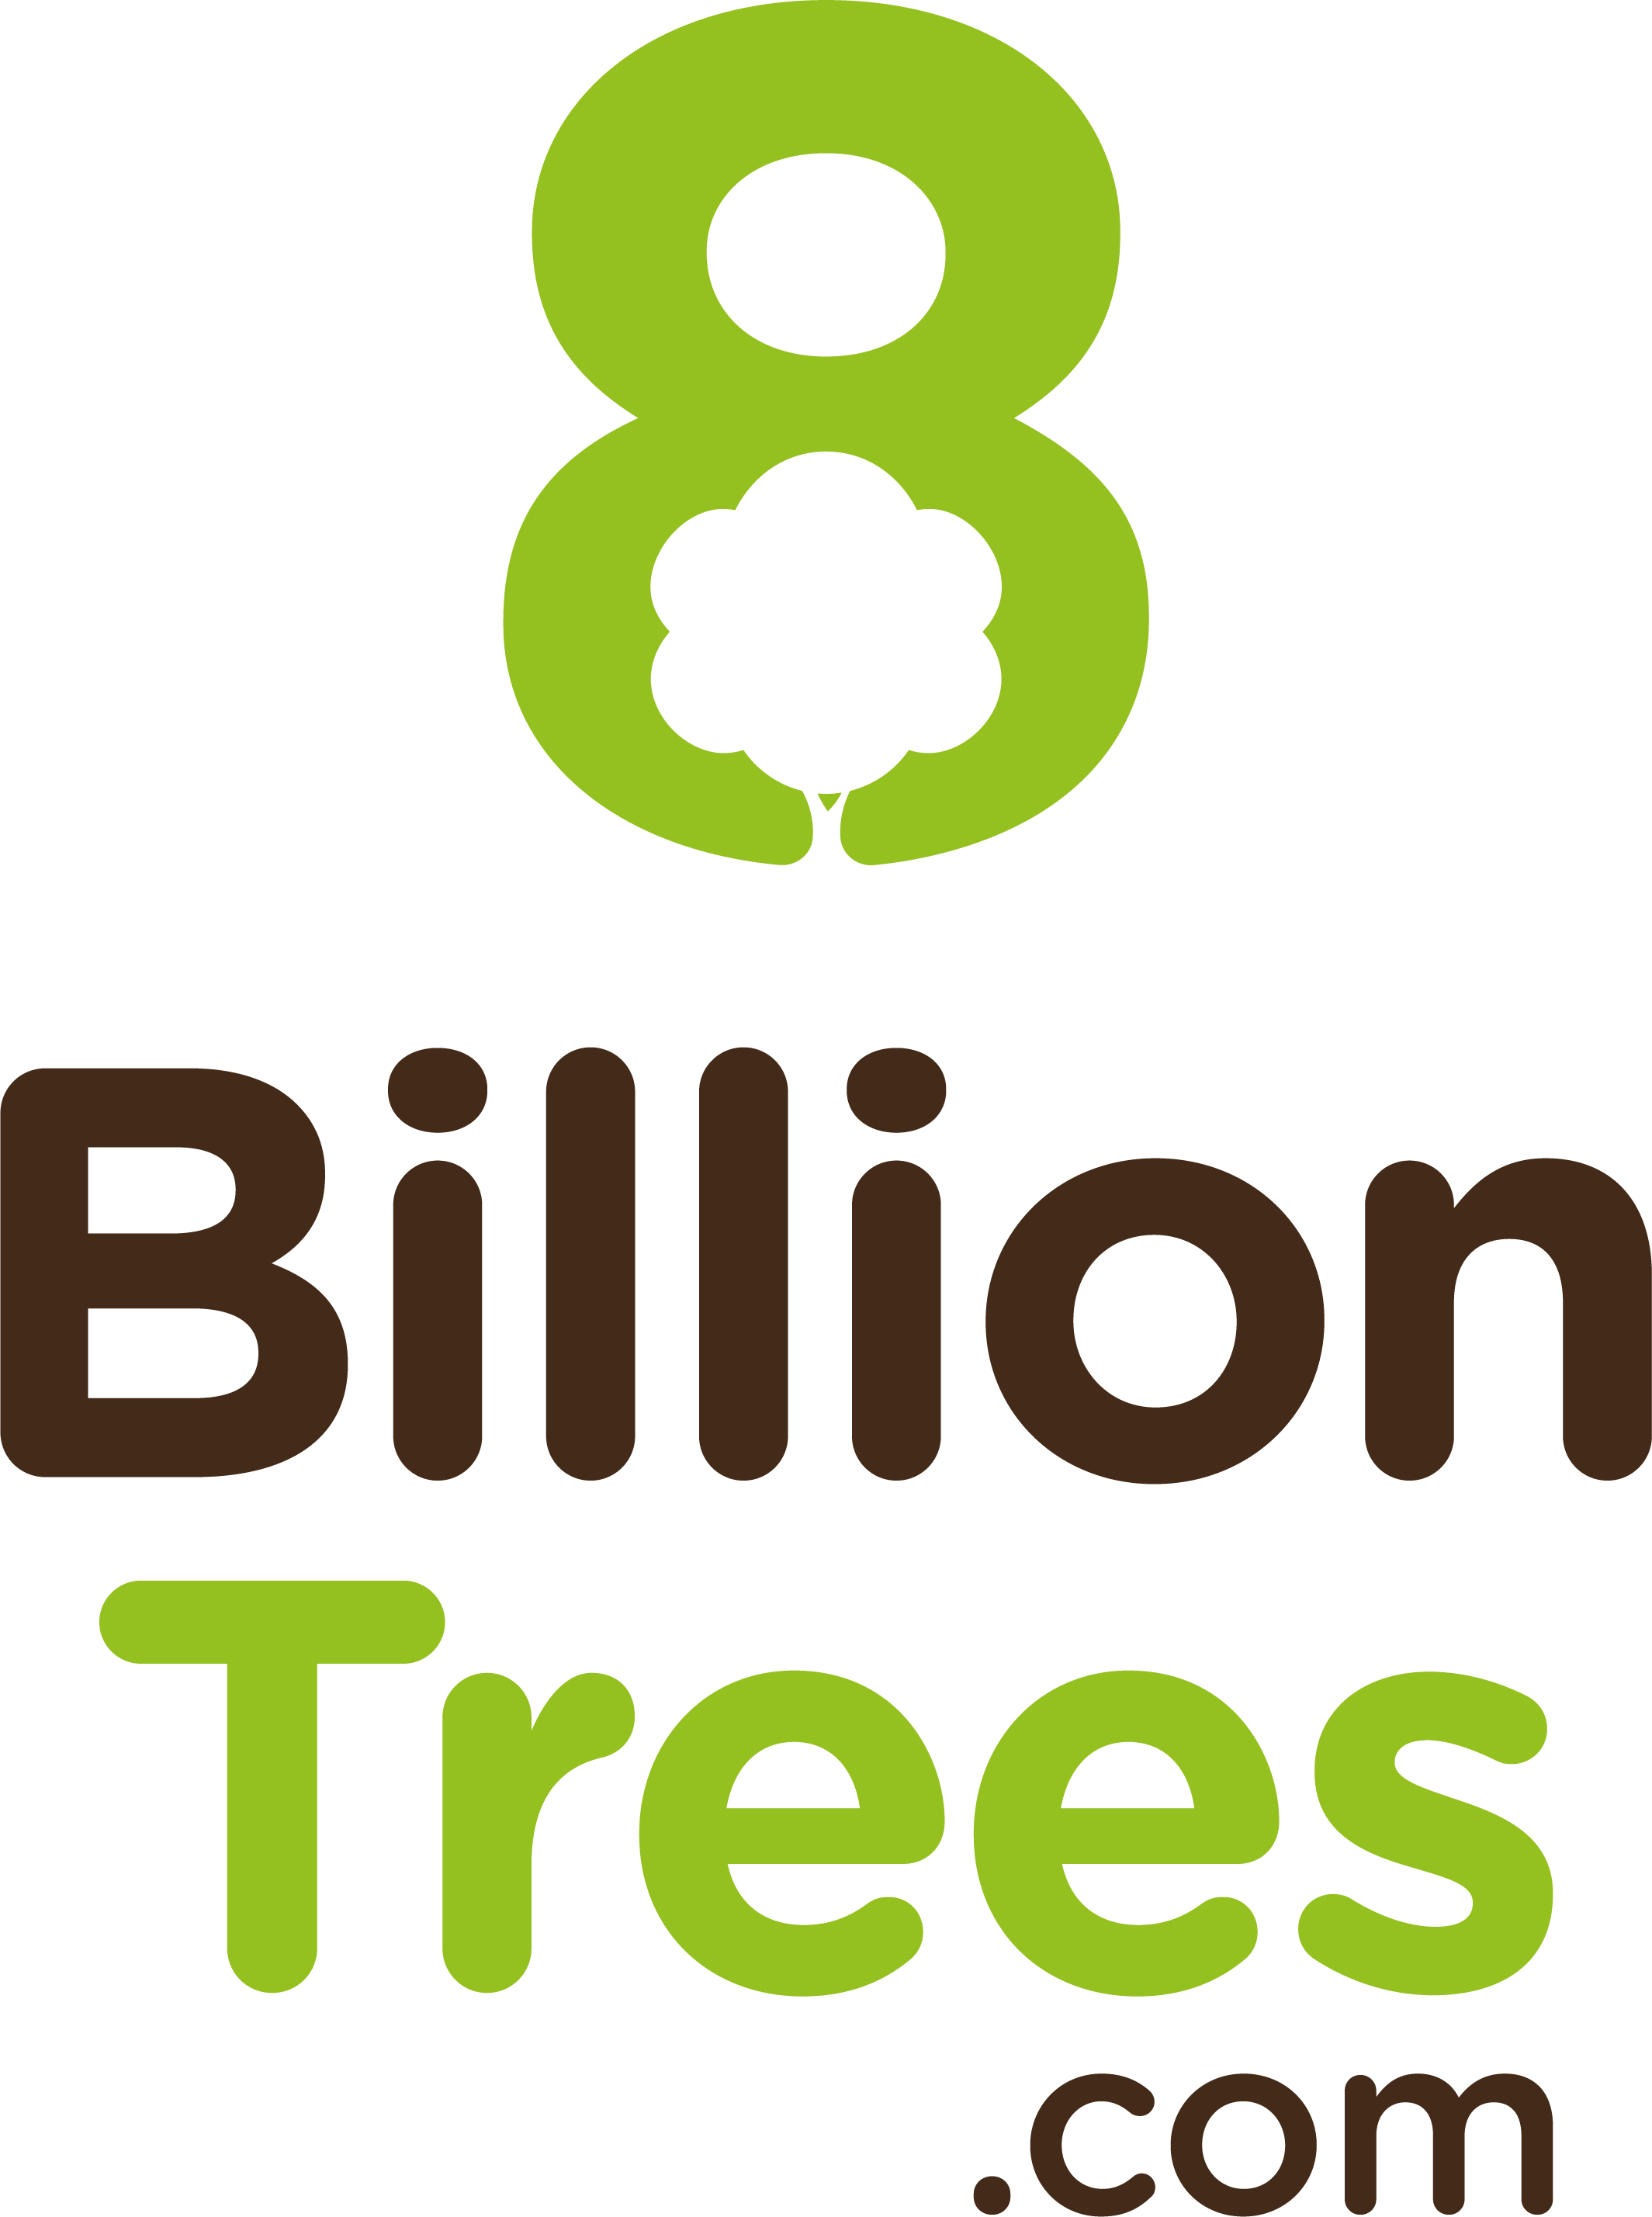 8 Billion Trees